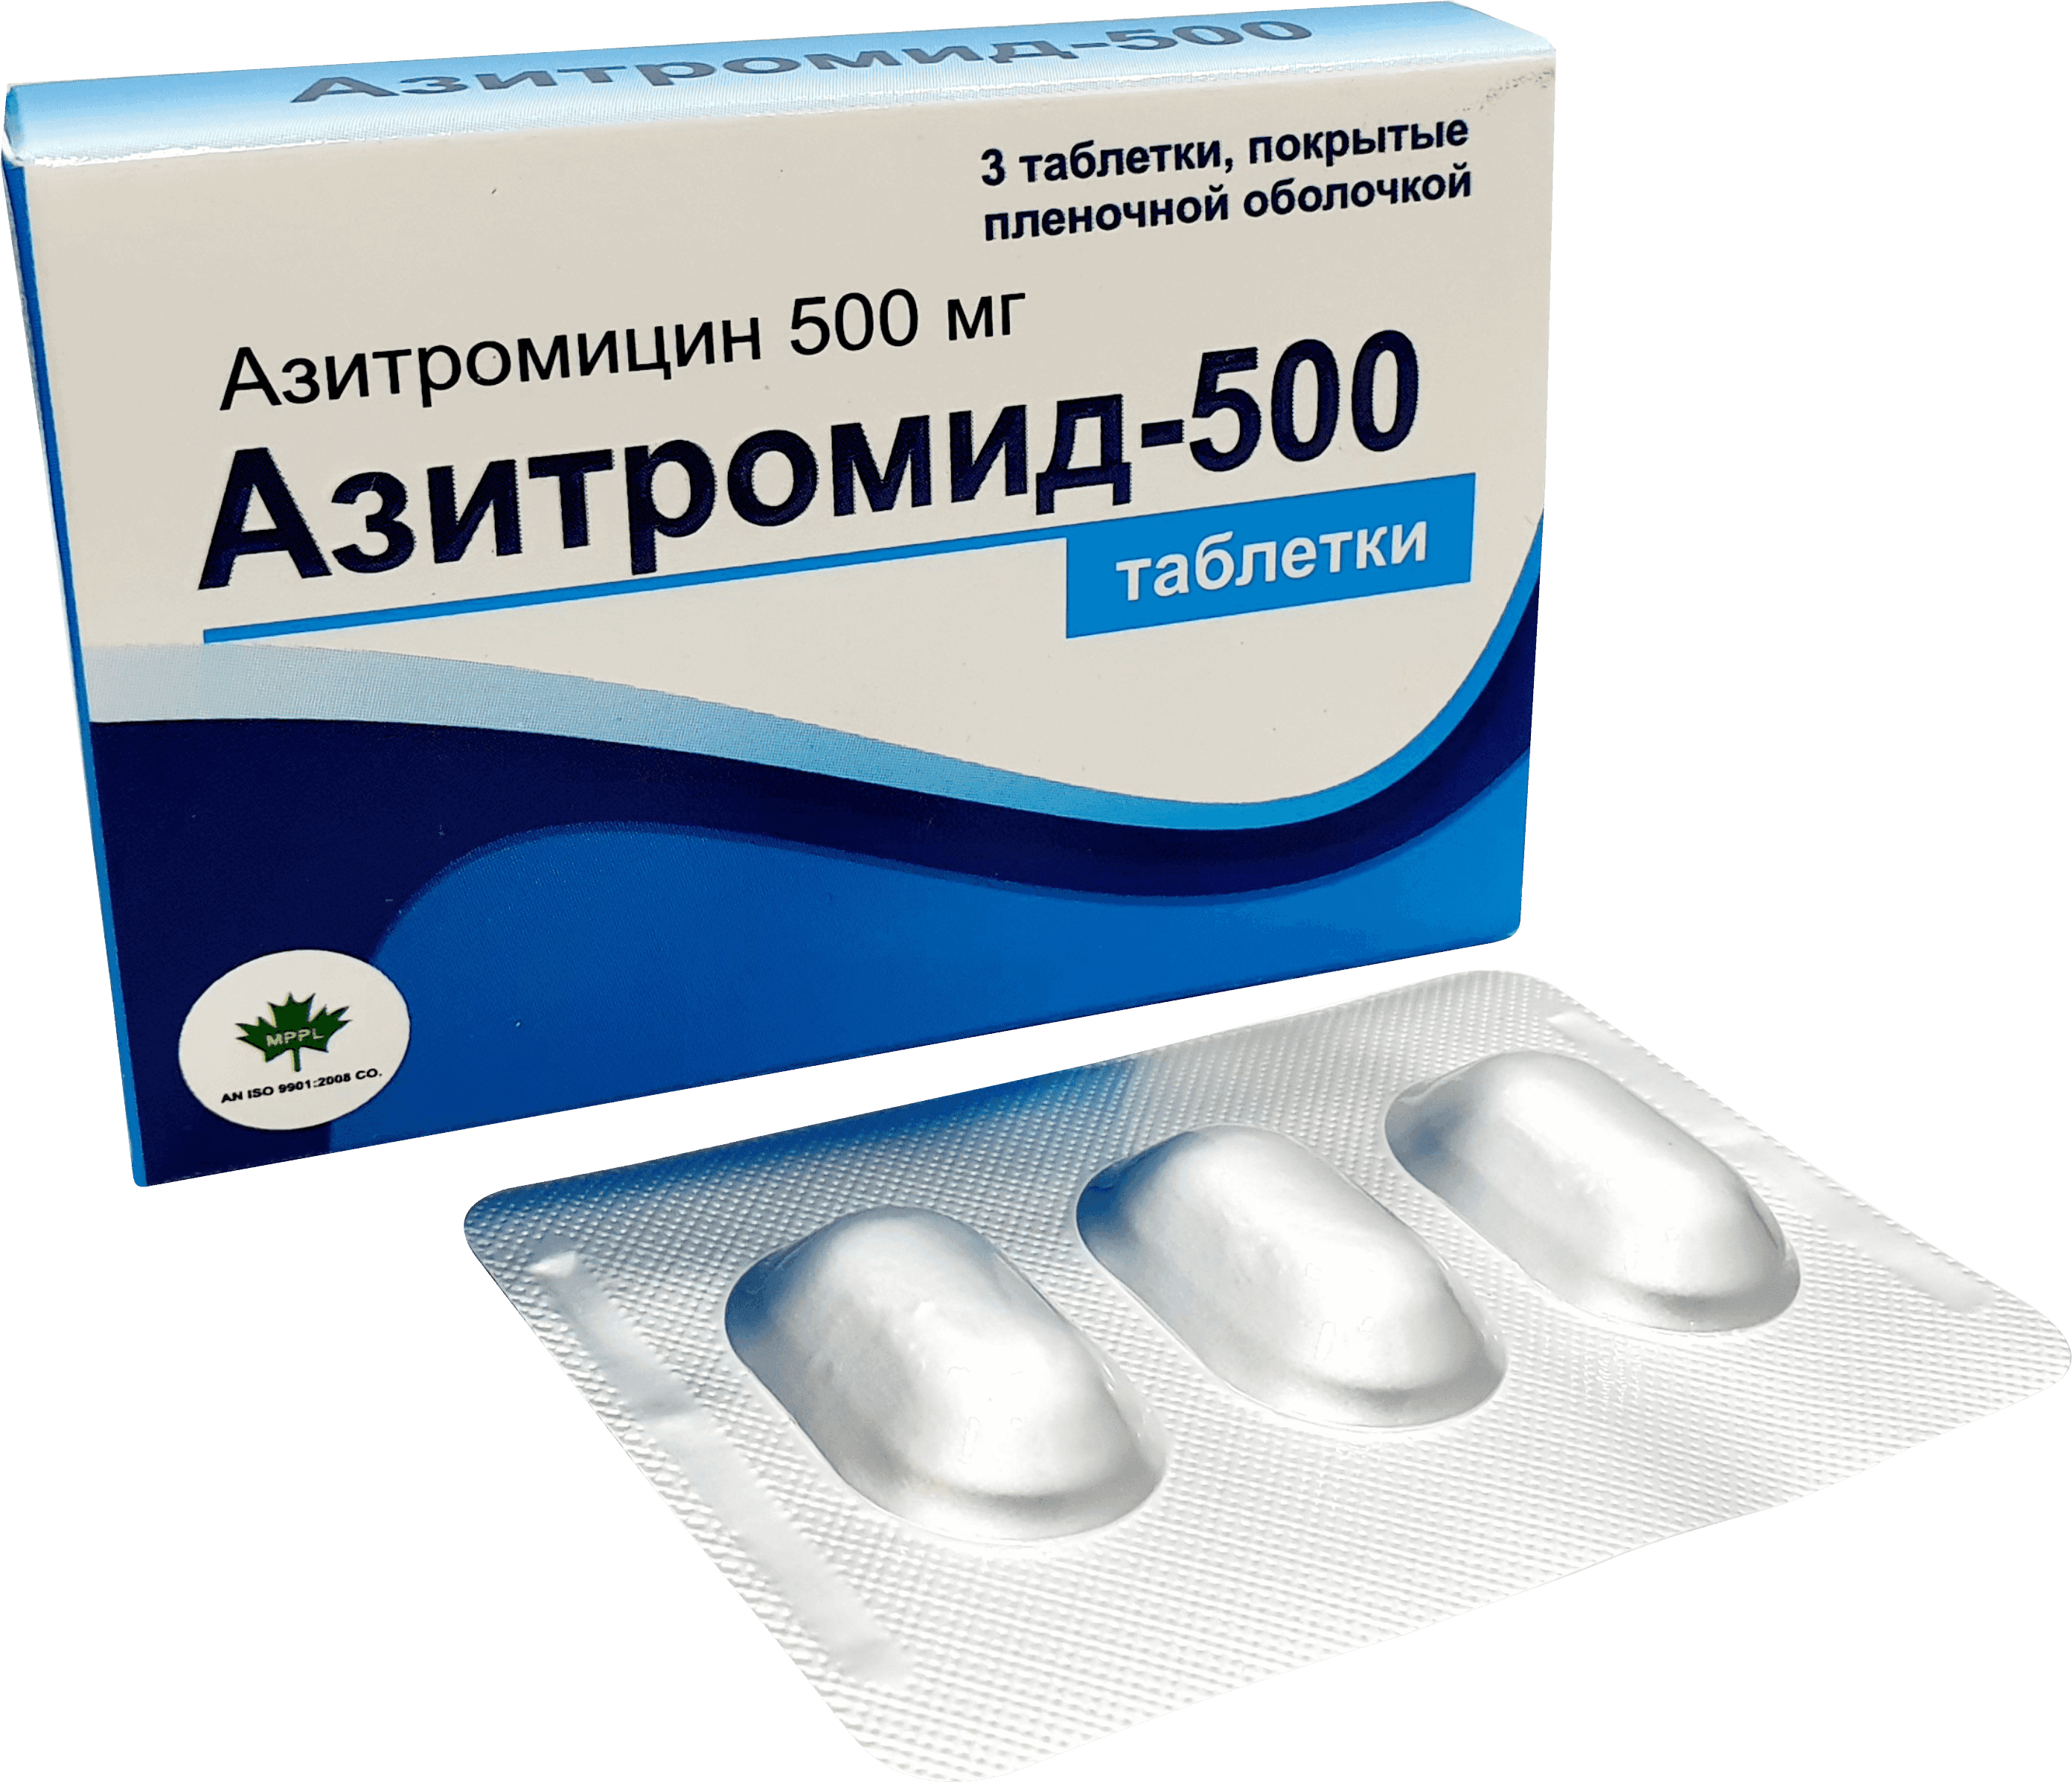 AZITROMID 500 N3